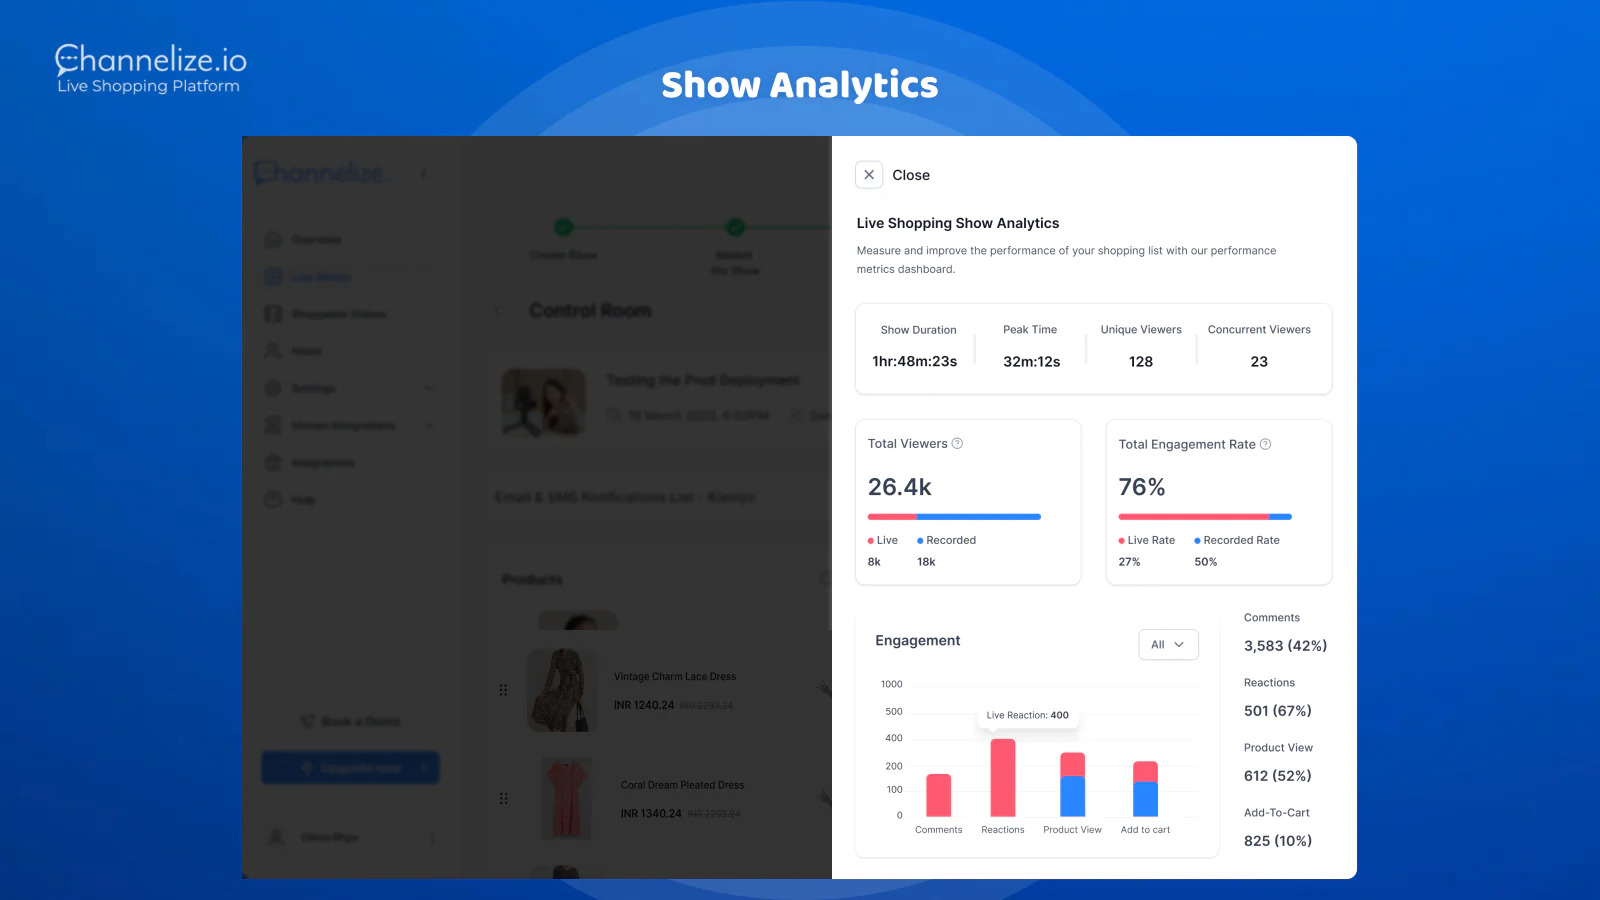 Showcasing Show Analytics via Dashboard